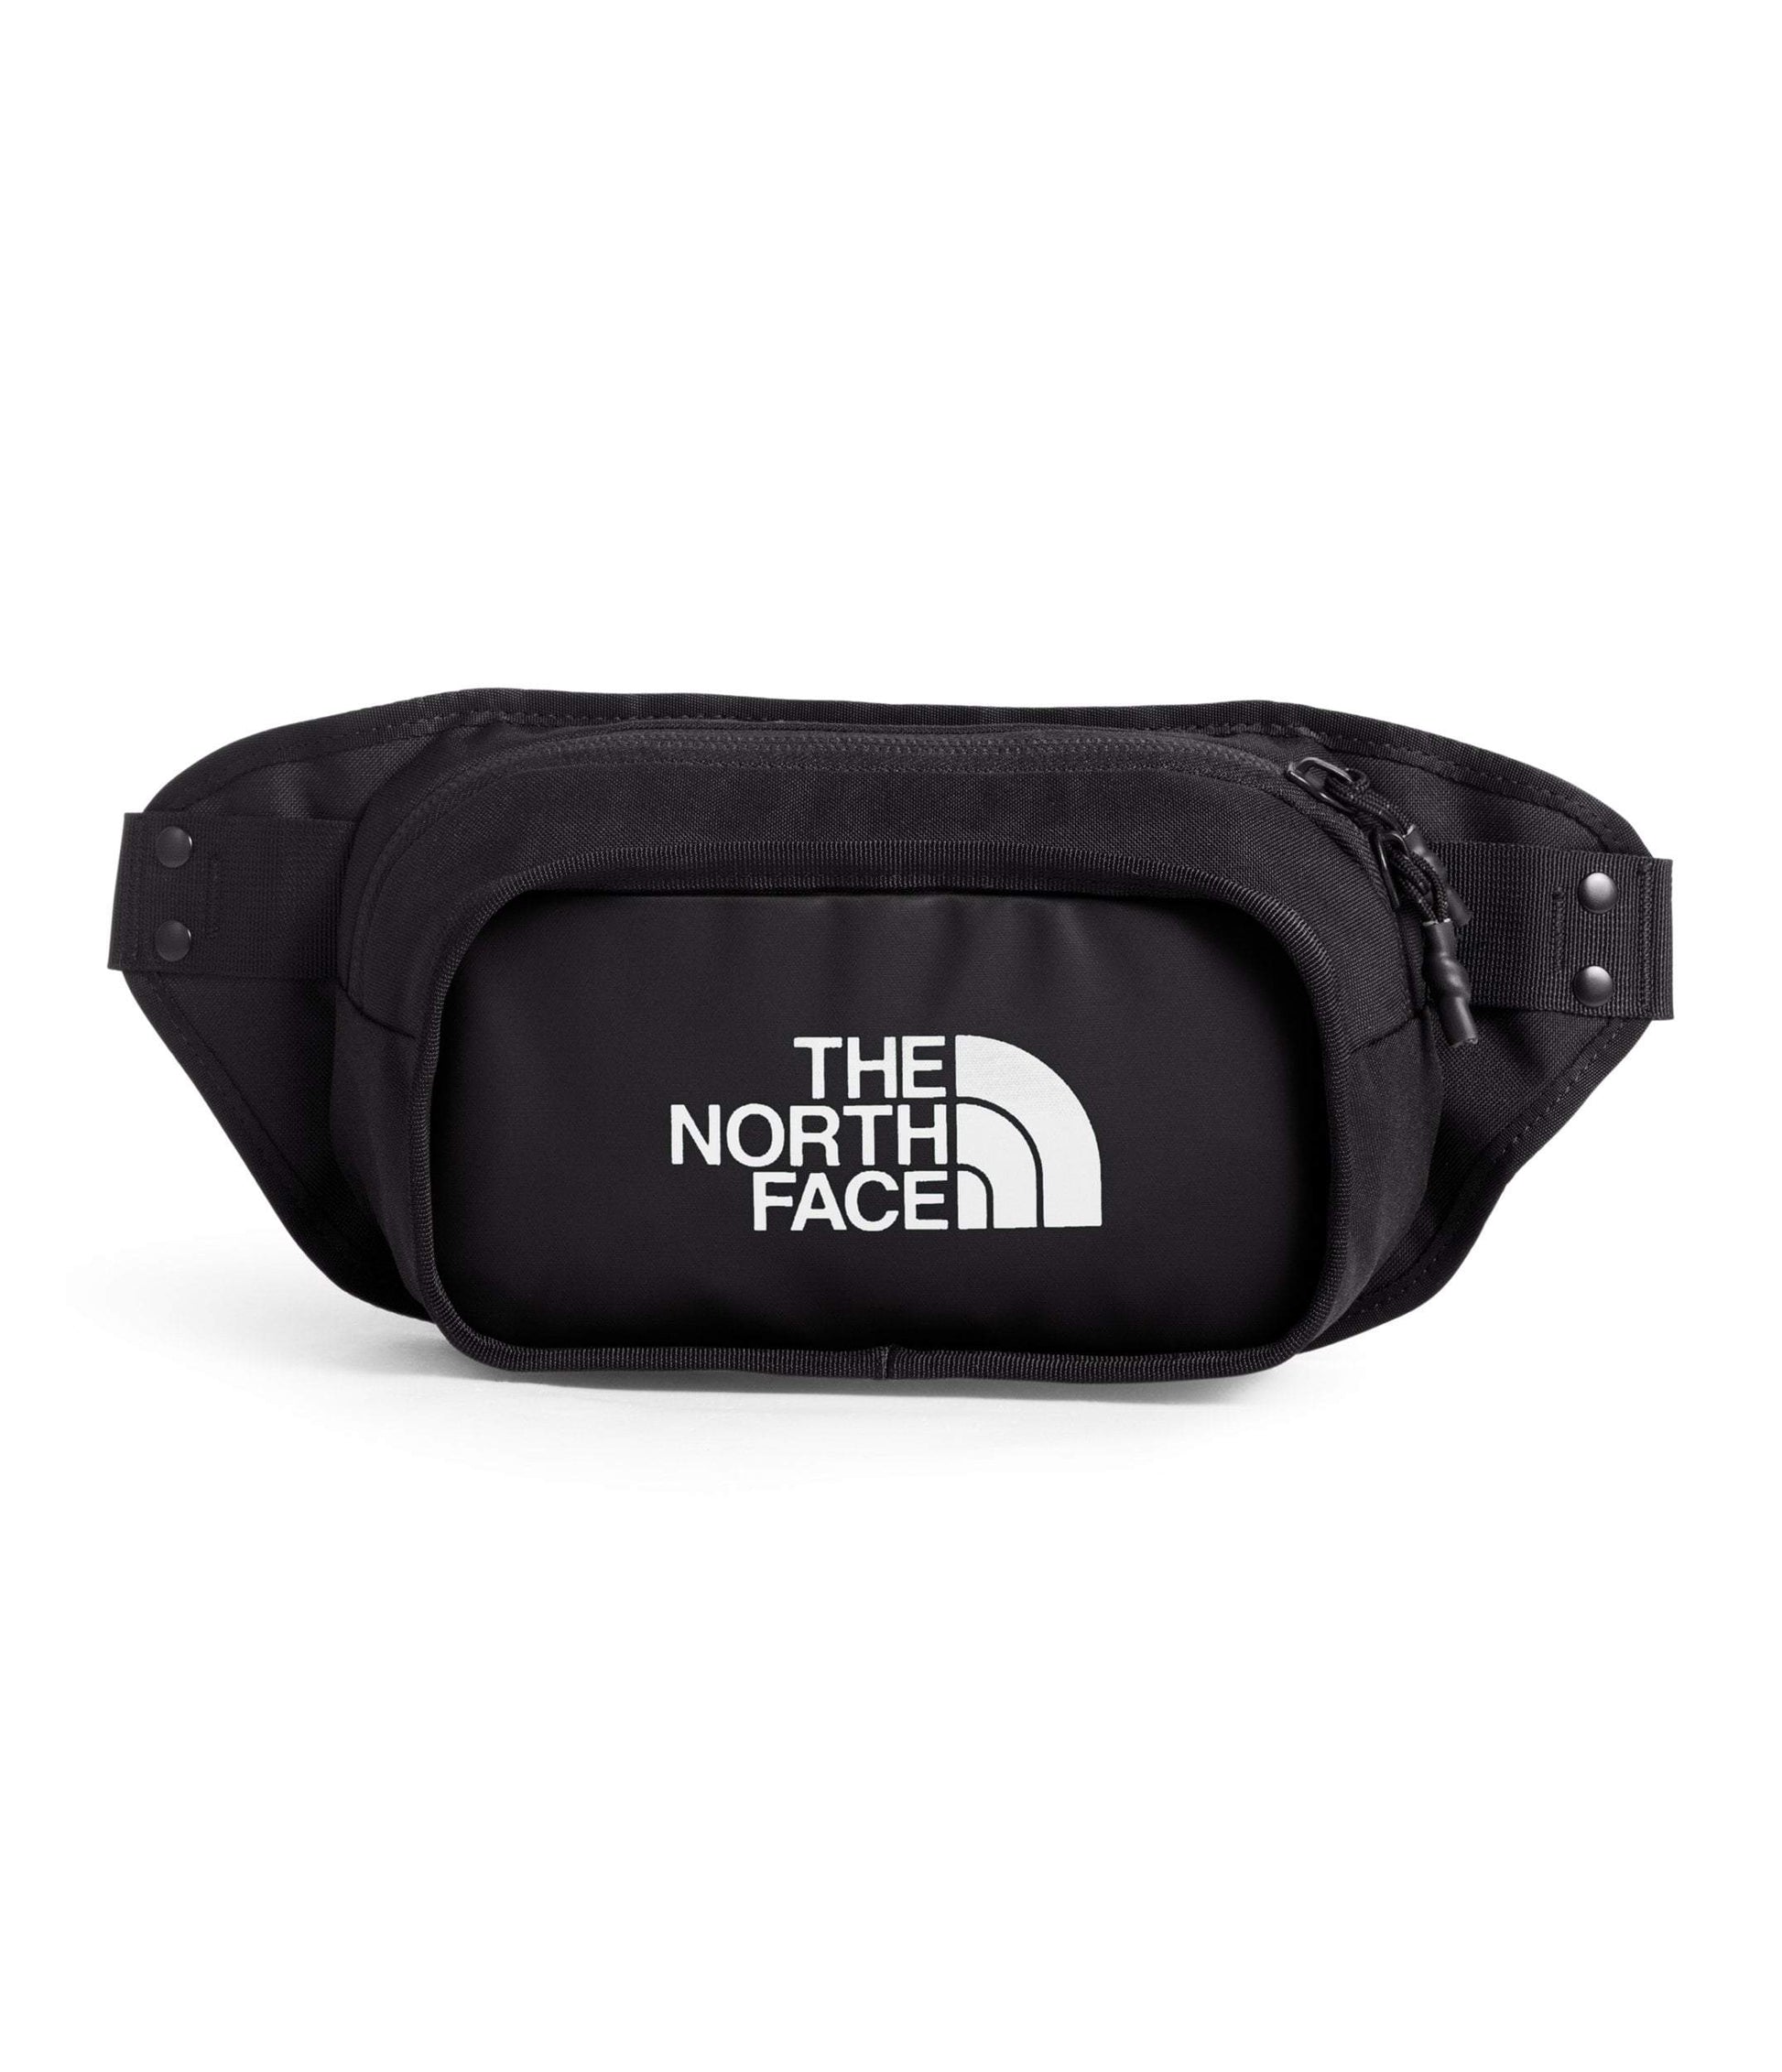 The North Face Explore Hip Pack - TNF Black/TNF White